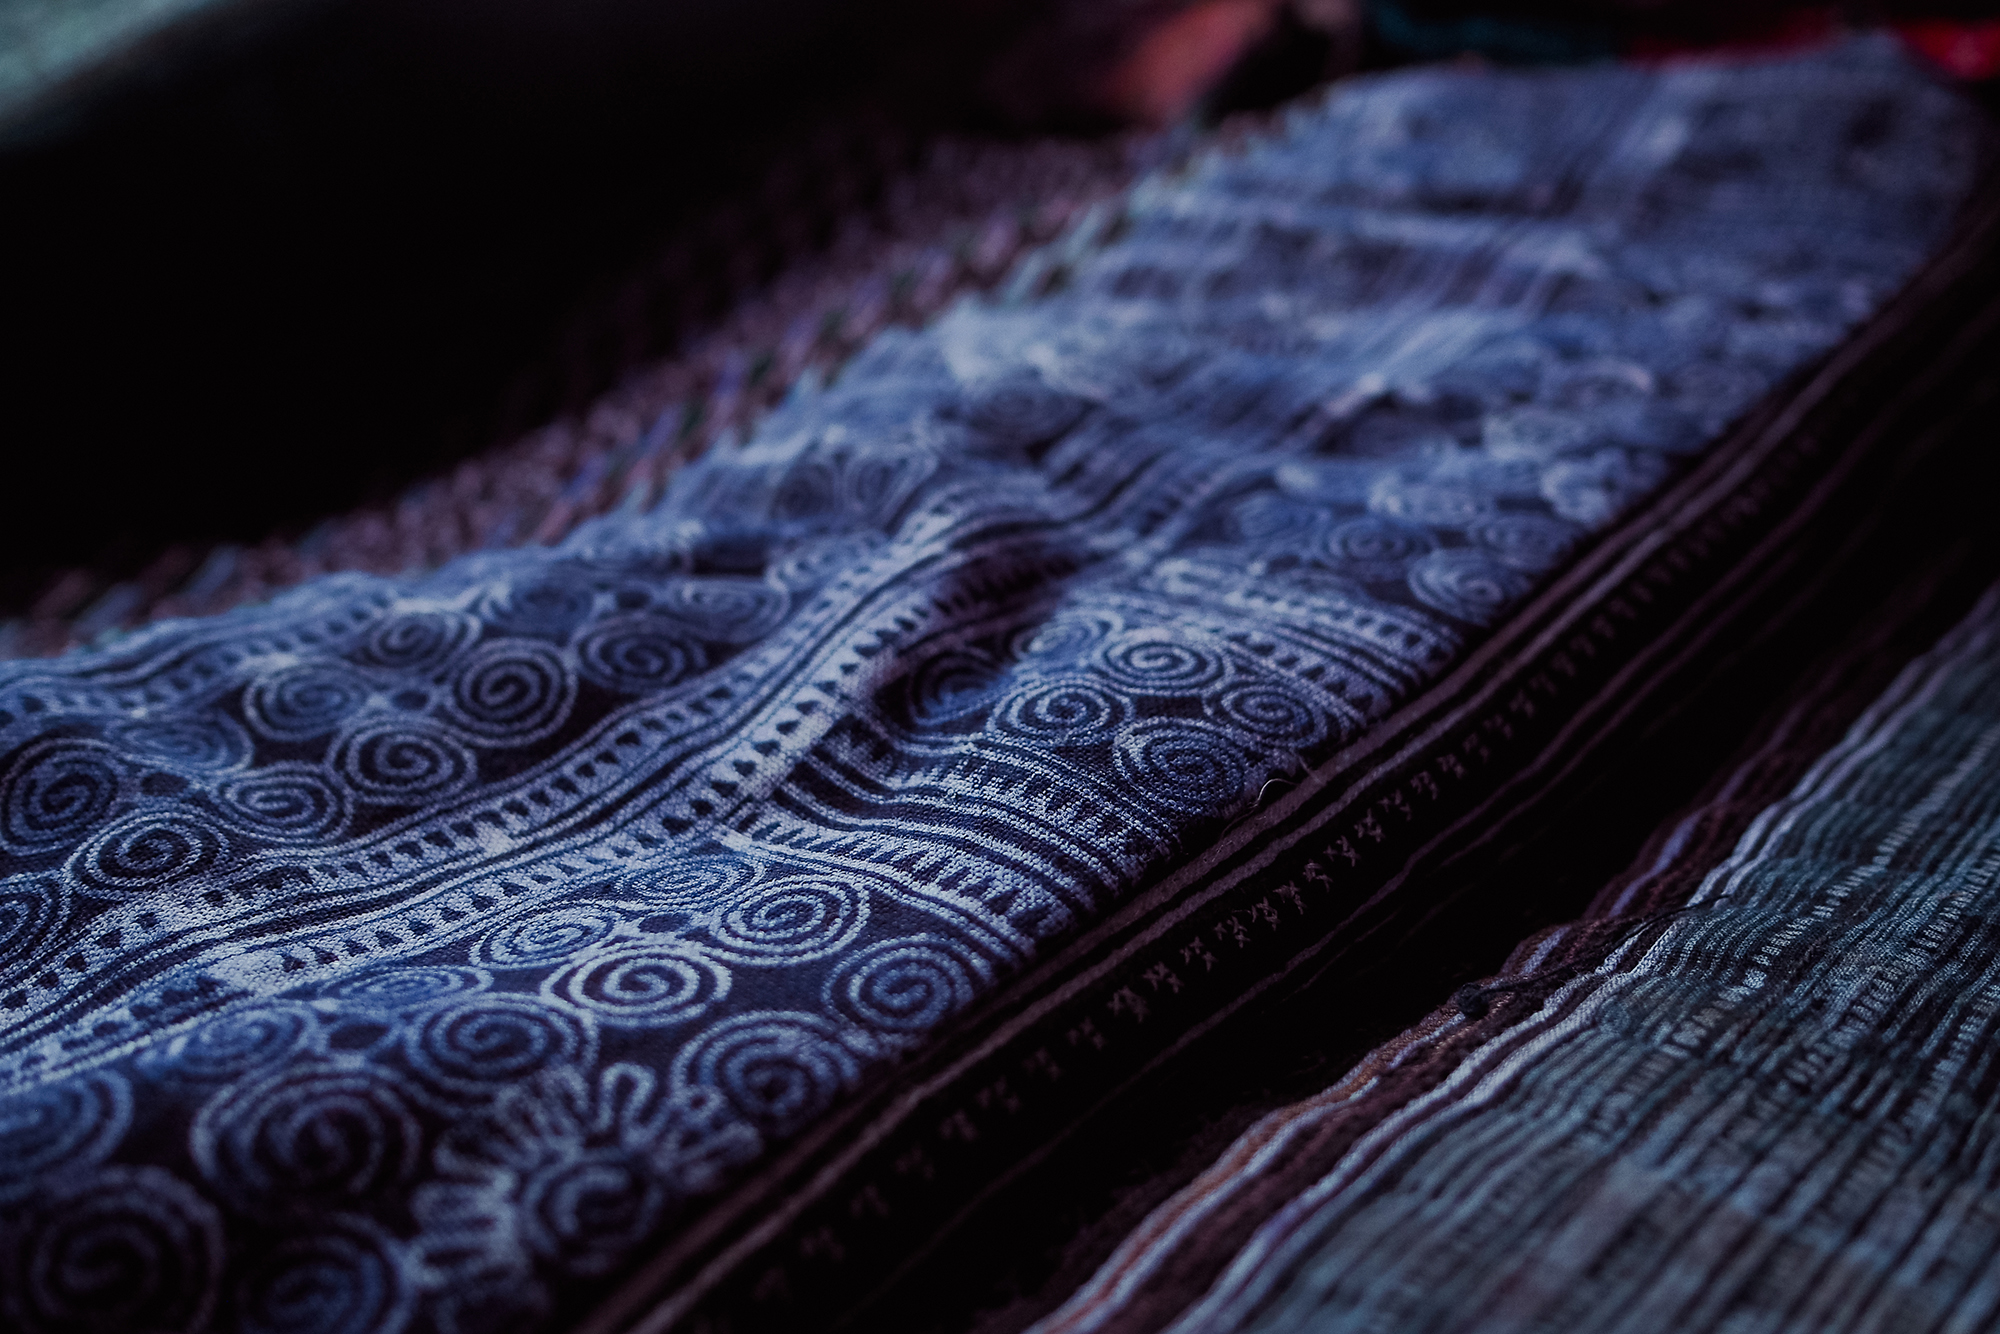 Tissu traditionnel du Nord, technique batik teinture indigo